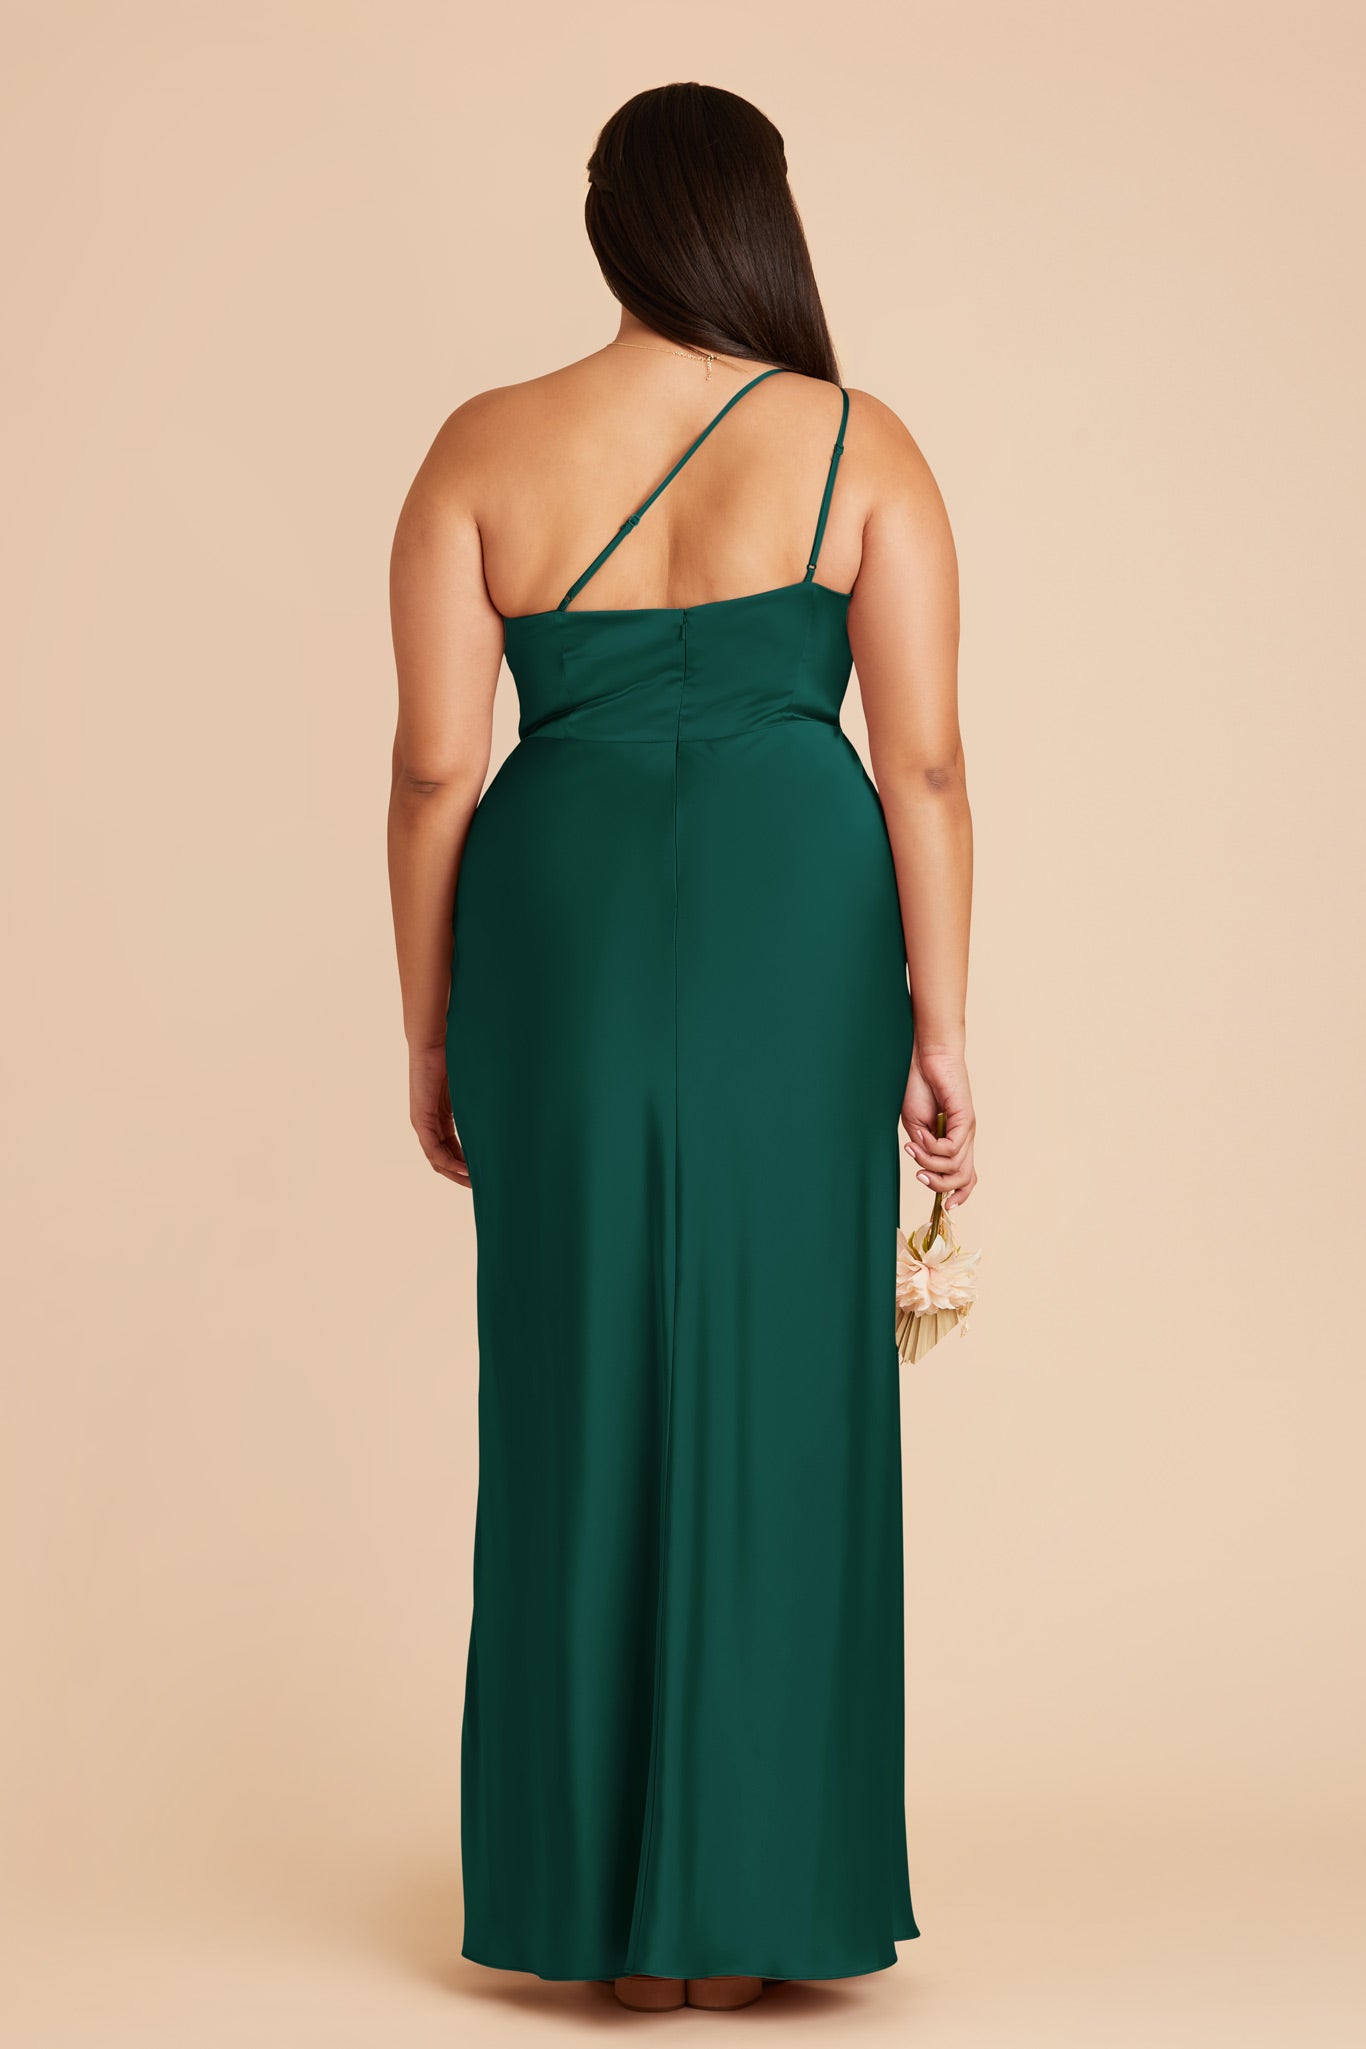 Emerald Kensie Matte Satin Dress by Birdy Grey